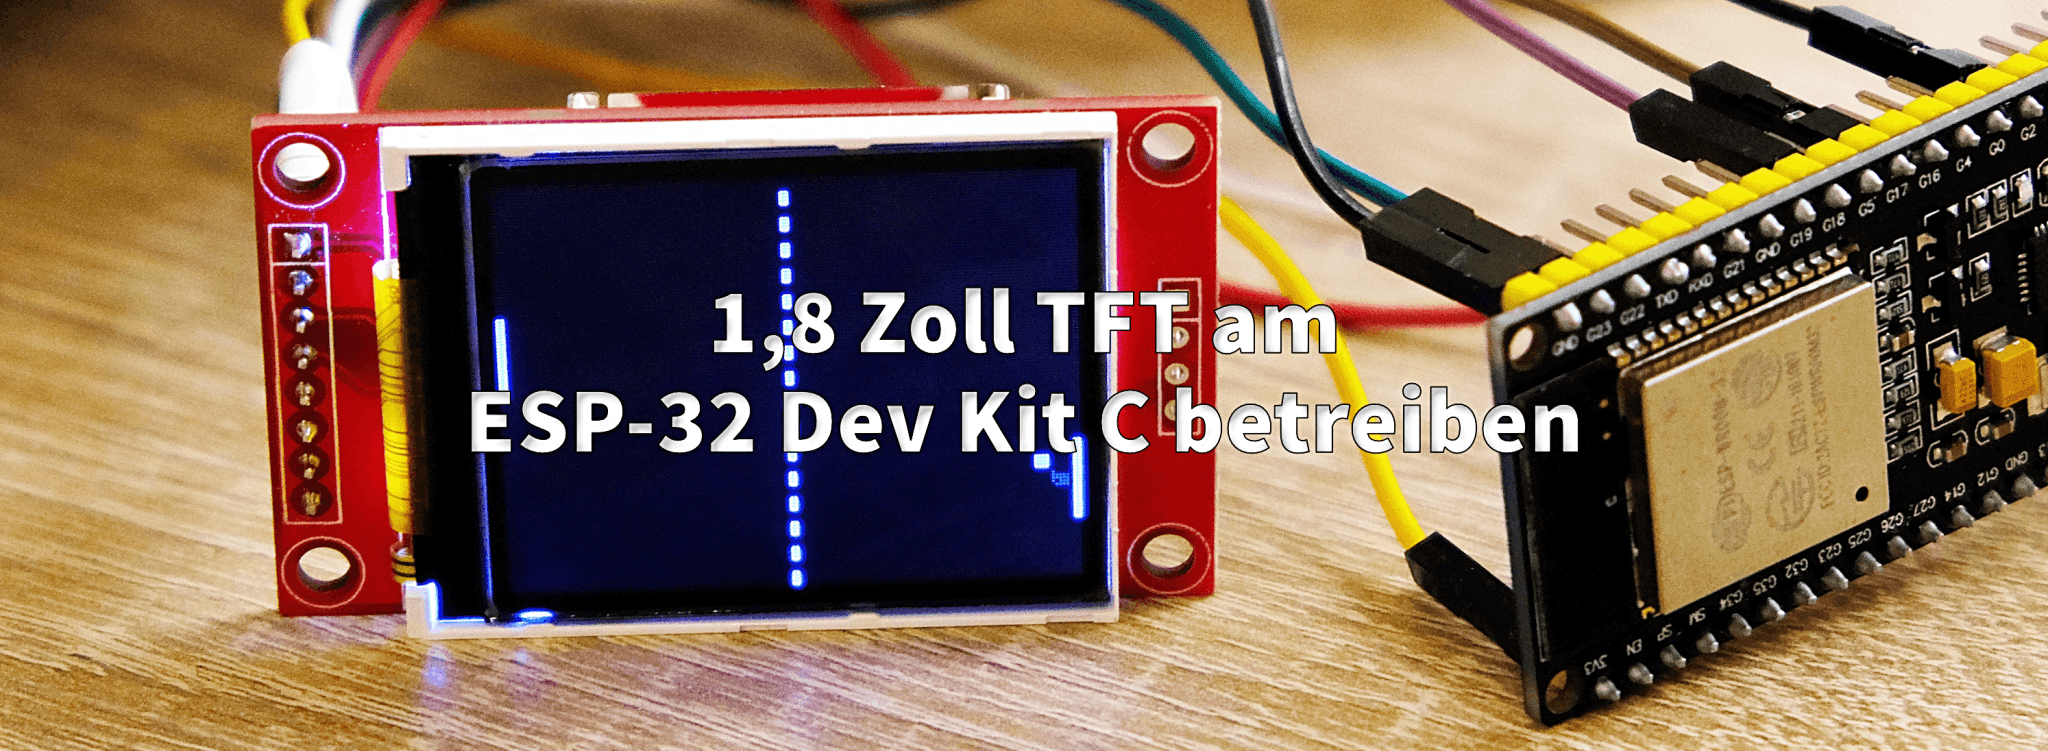 1,8 Zoll TFT am ESP-32 Dev Kit C betreiben - AZ-Delivery